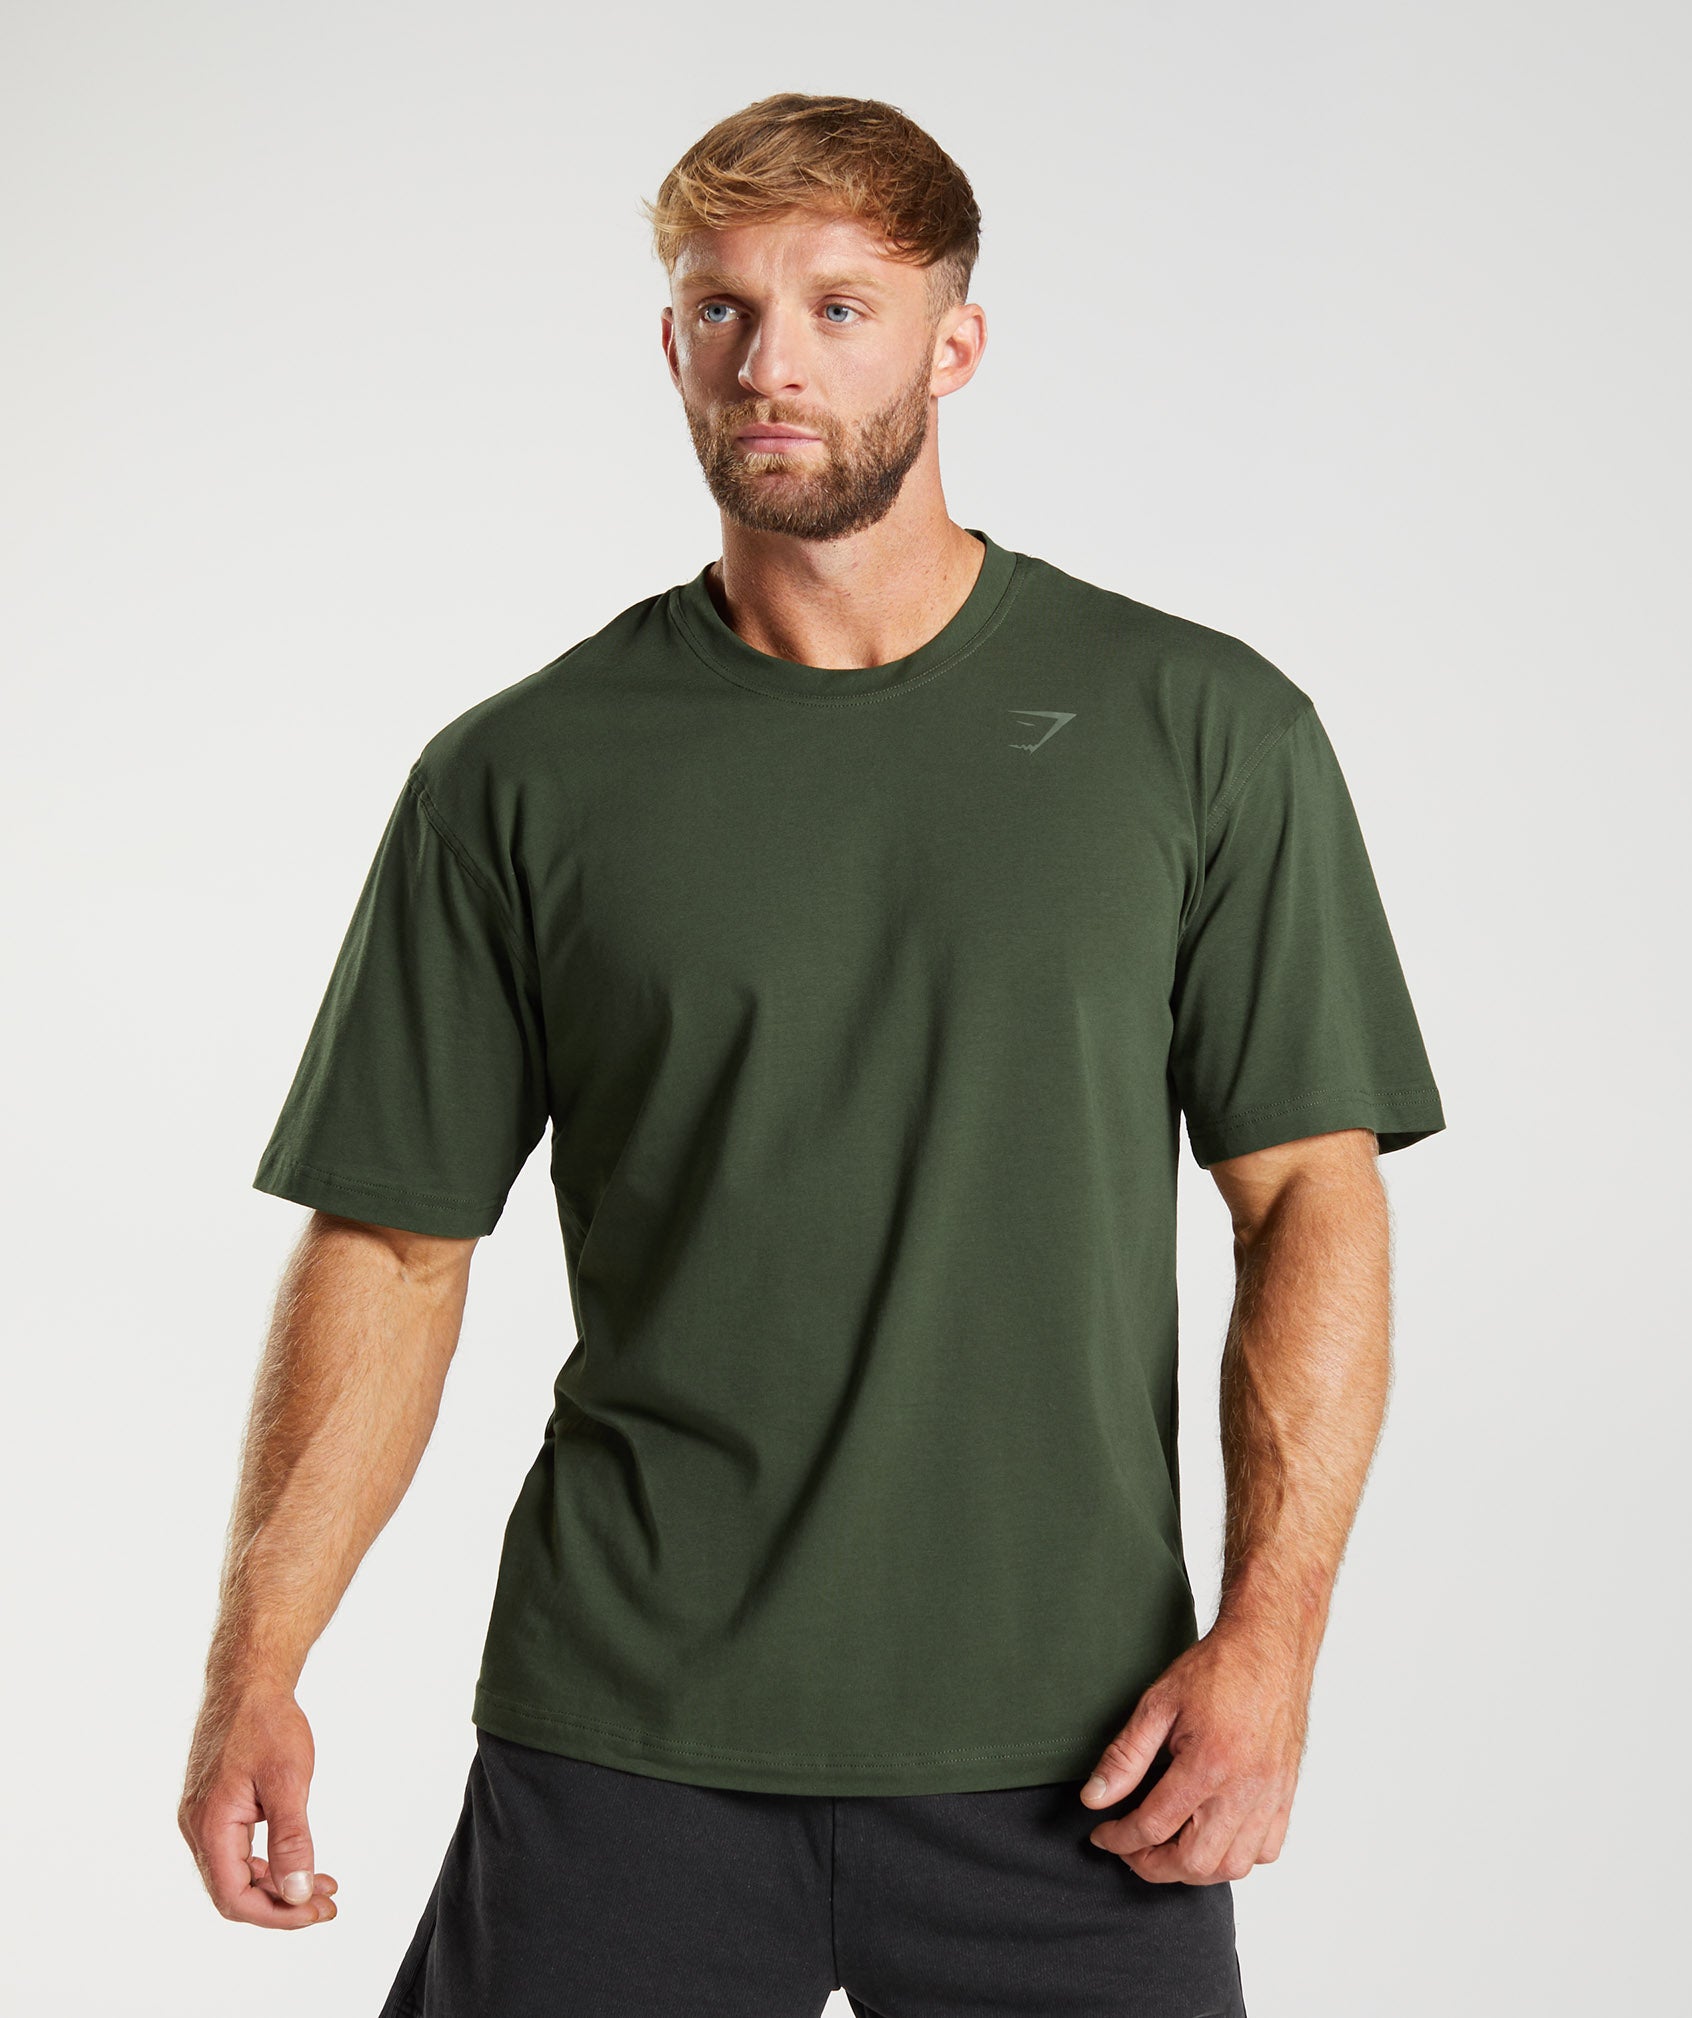 Gymshark Power T-Shirt - Moss Olive